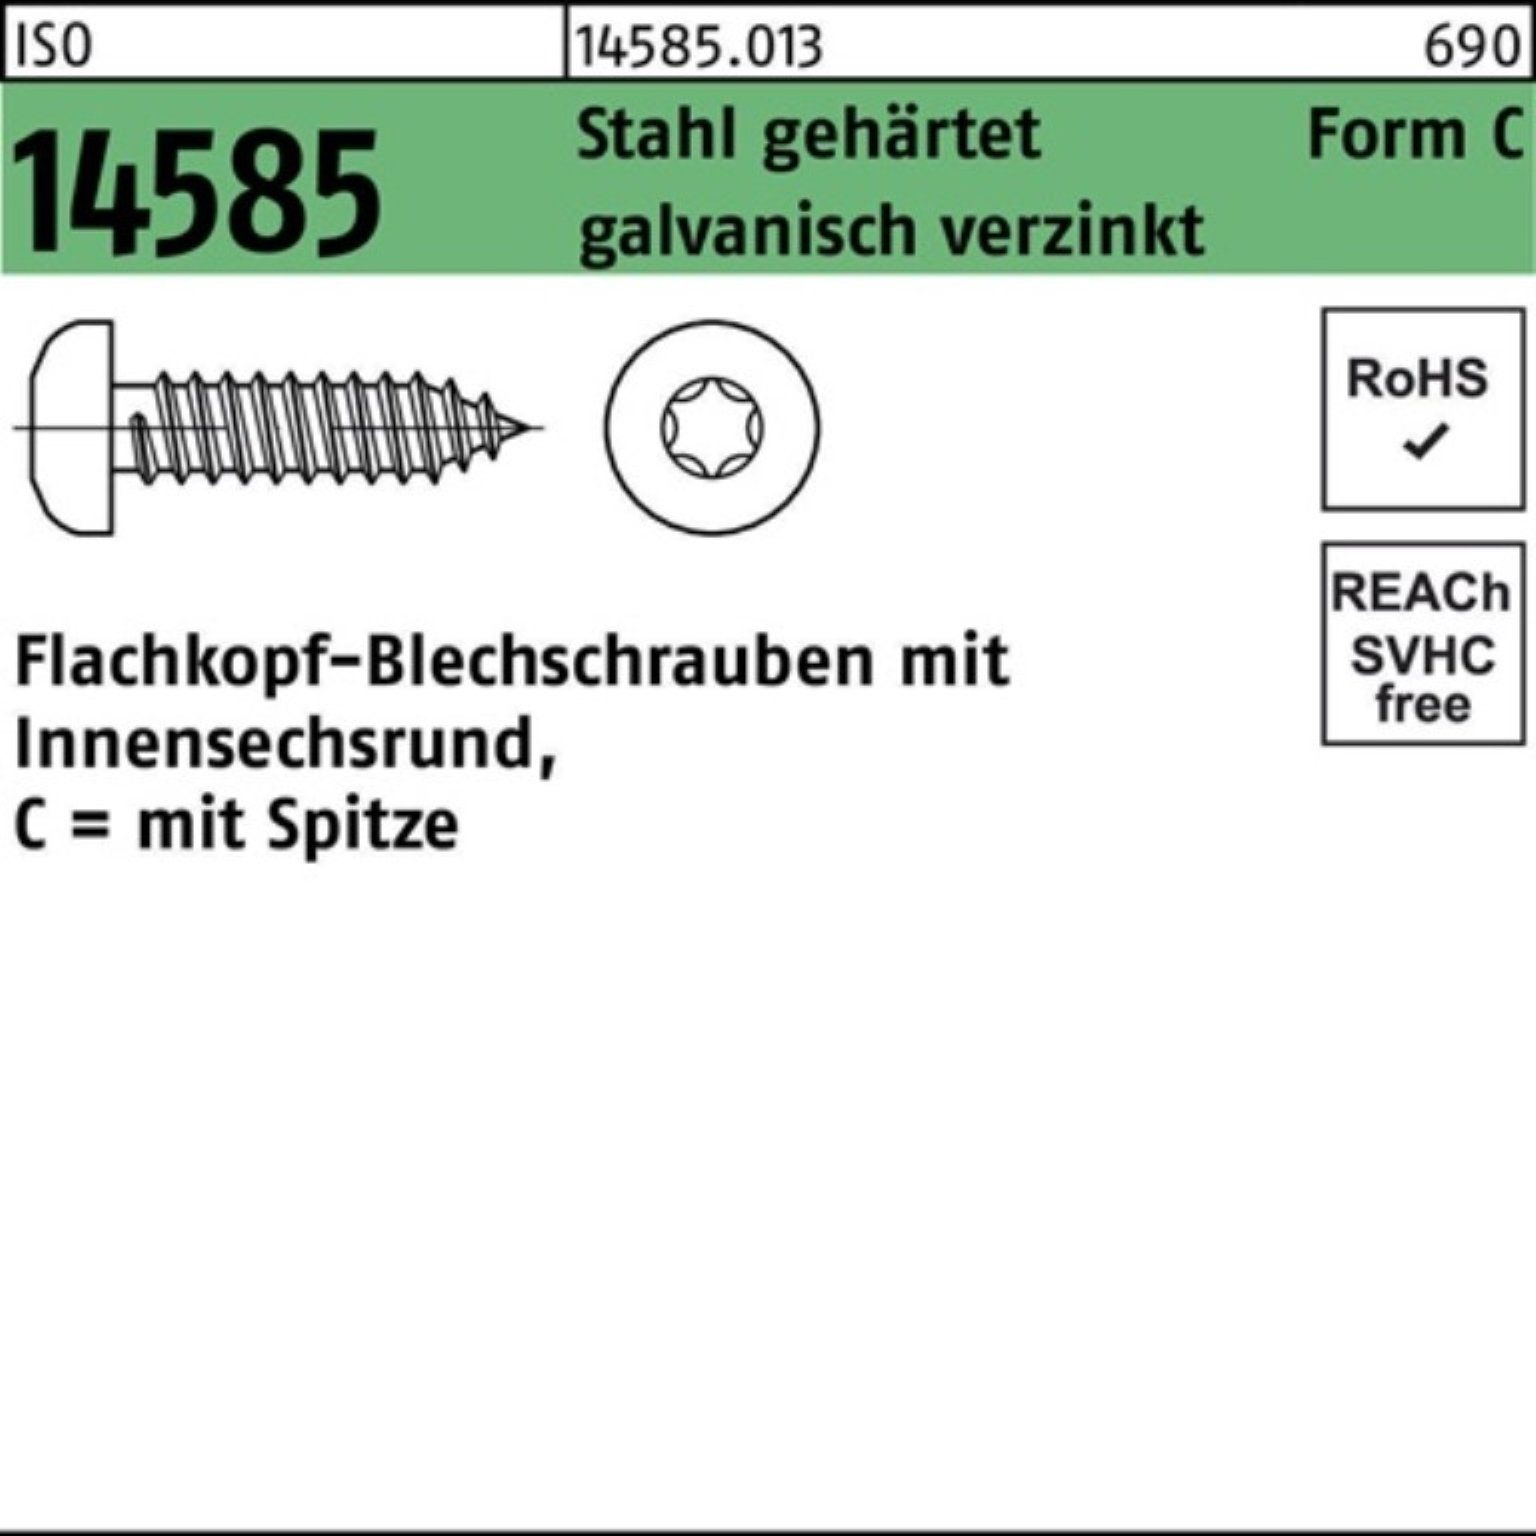 Reyher Blechschraube 250er Pack Blechschraube 4,8x80 ISR/Spitze -C-T25 14585 Stahl ISO geh